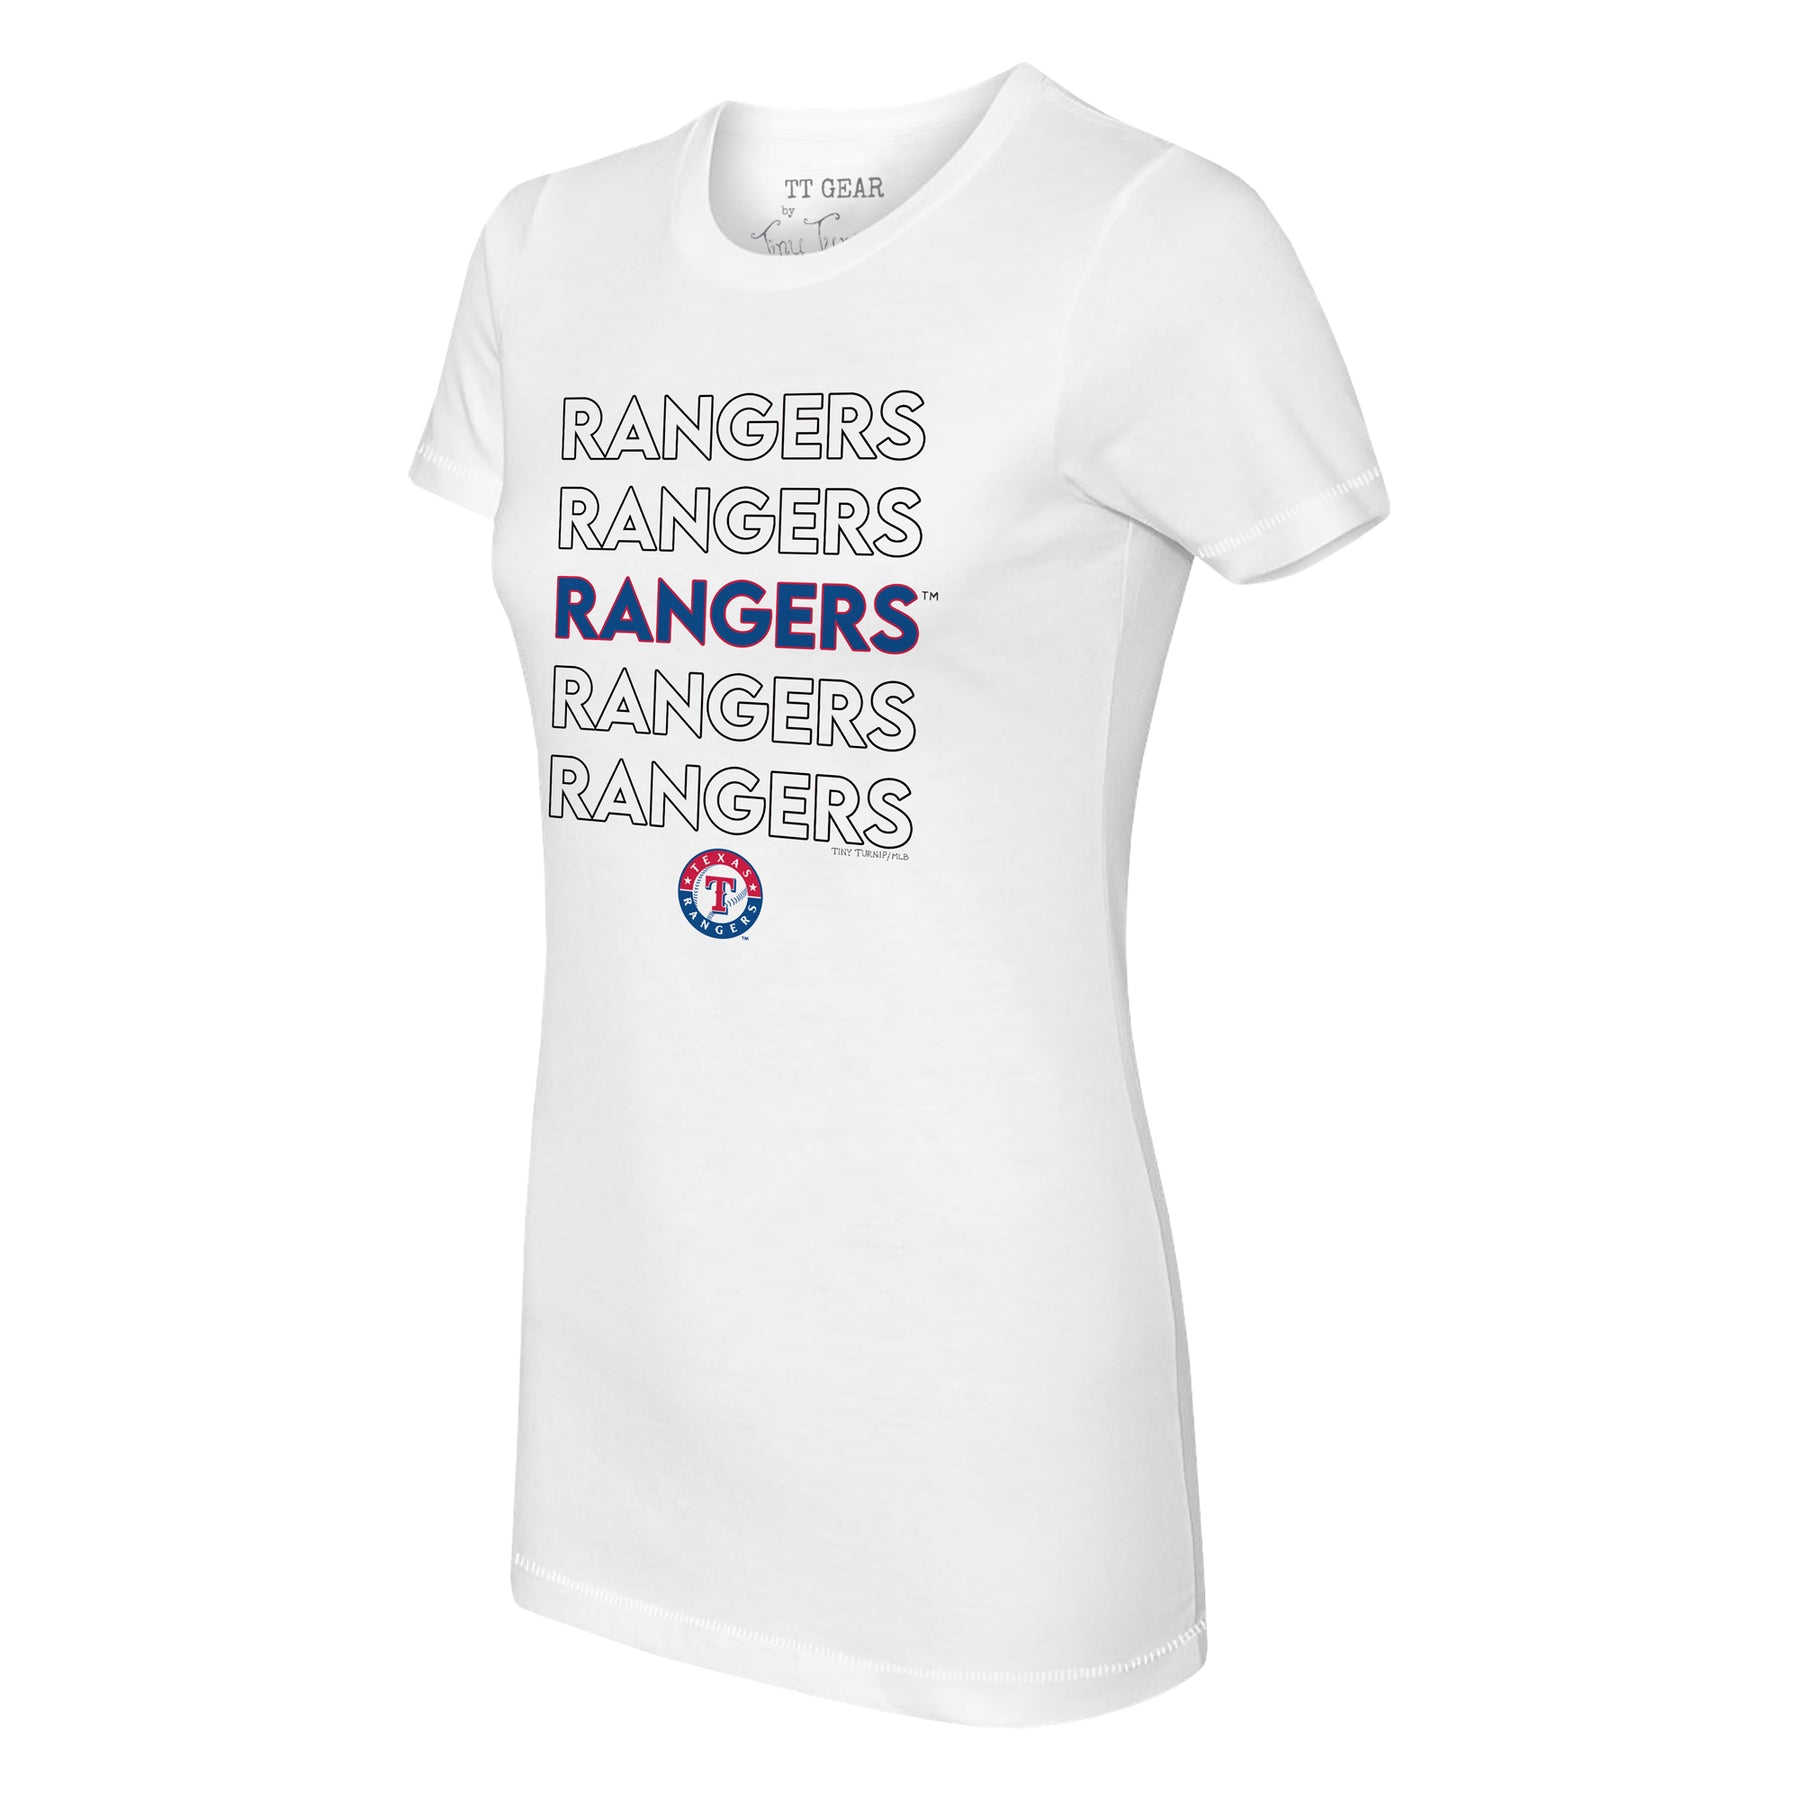 MLB Texas Rangers Women's Short Sleeve White Graphic Tee 